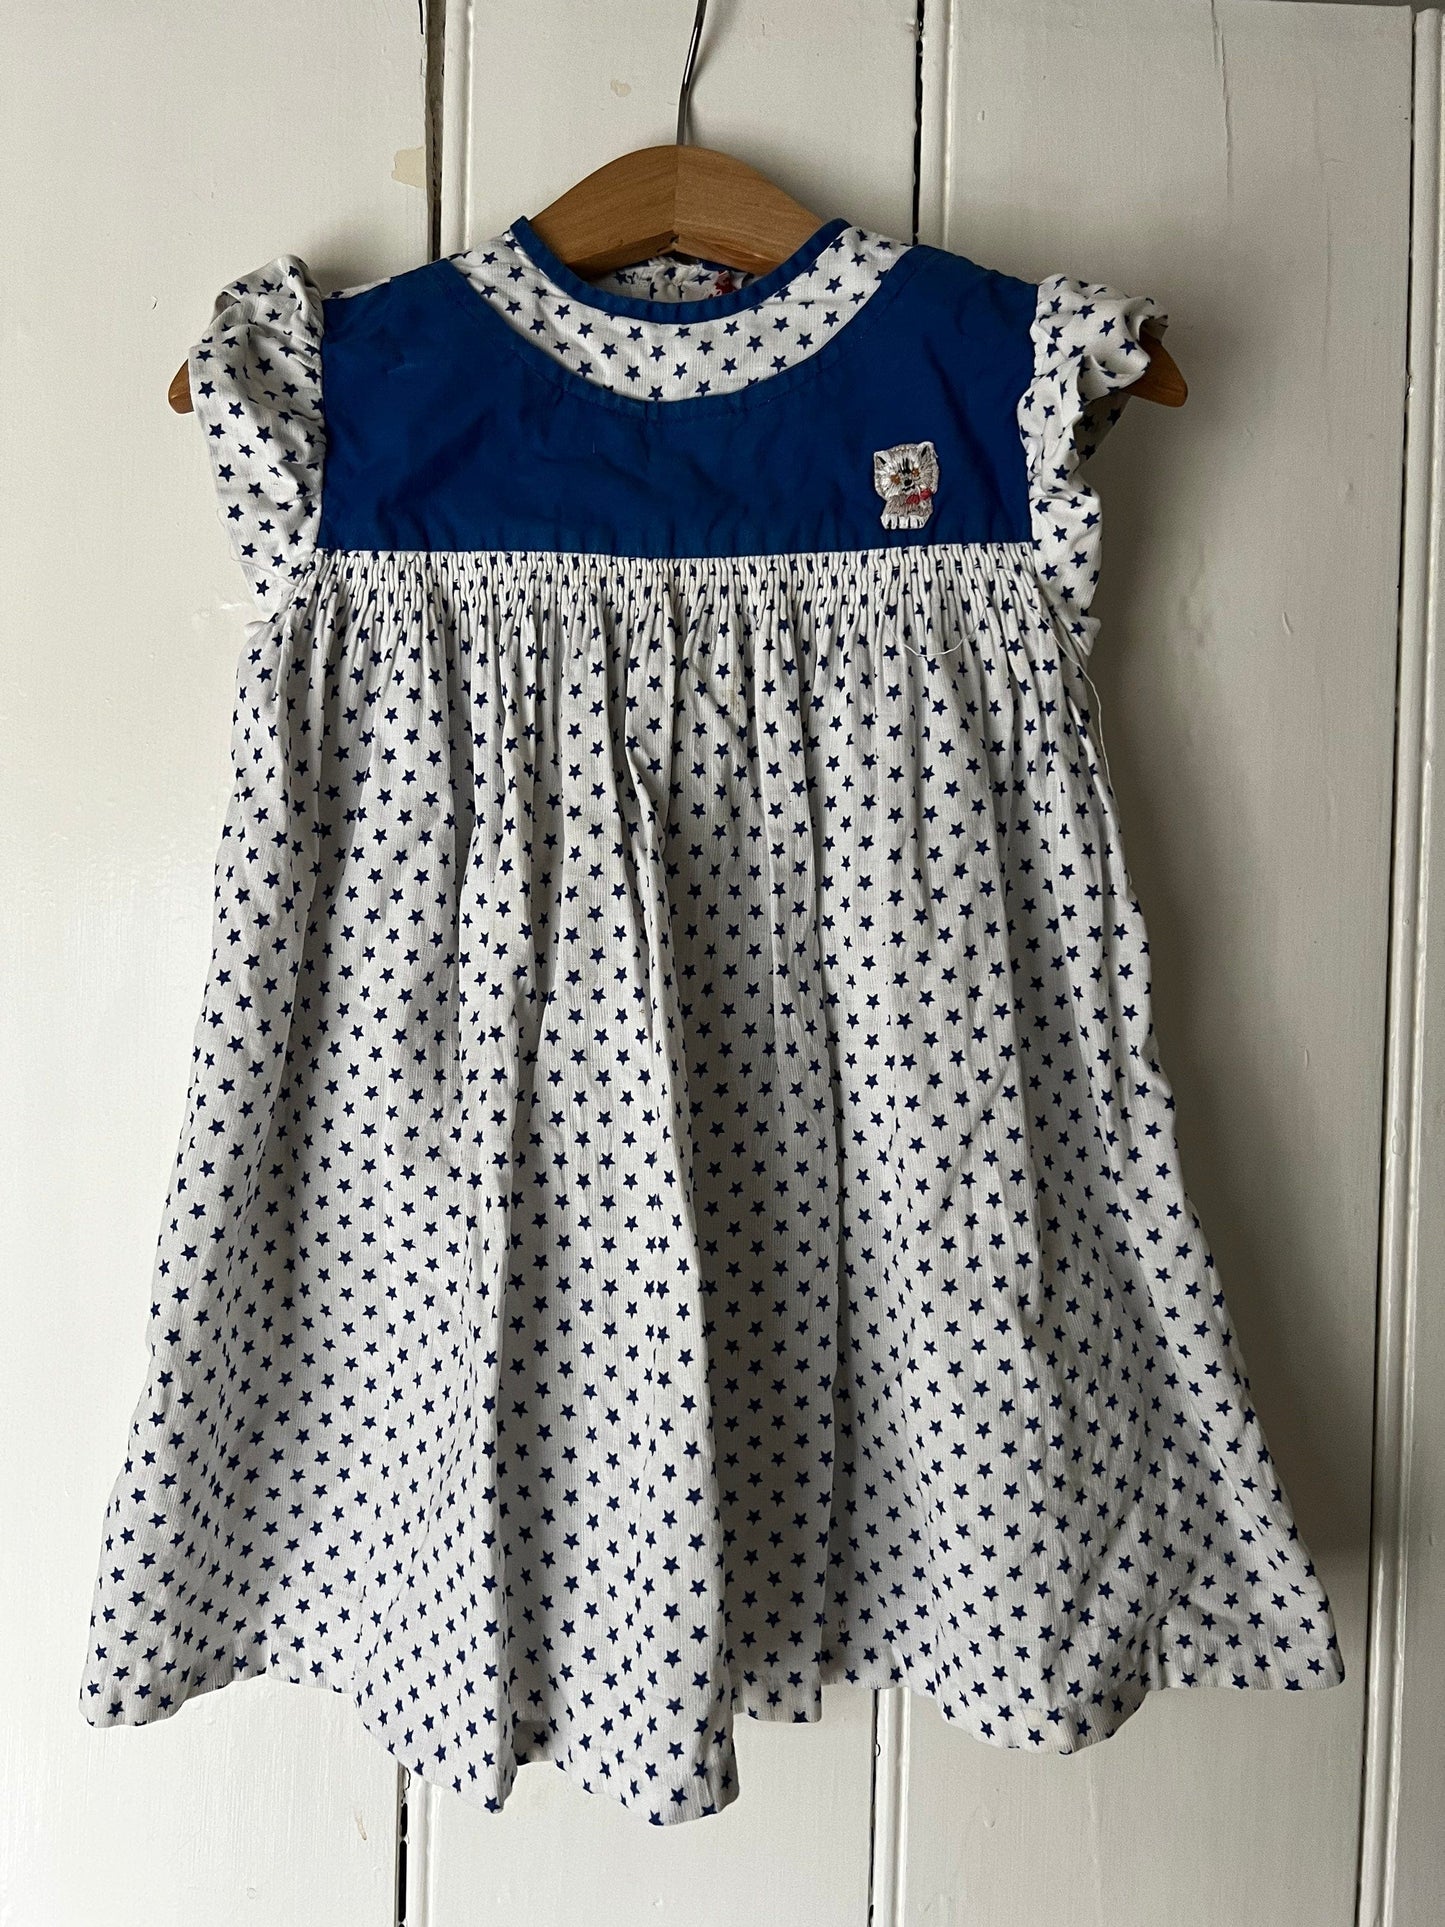 Vintage Girls Dress - Blue Star Patter Dress Baby Dress 2-3 years